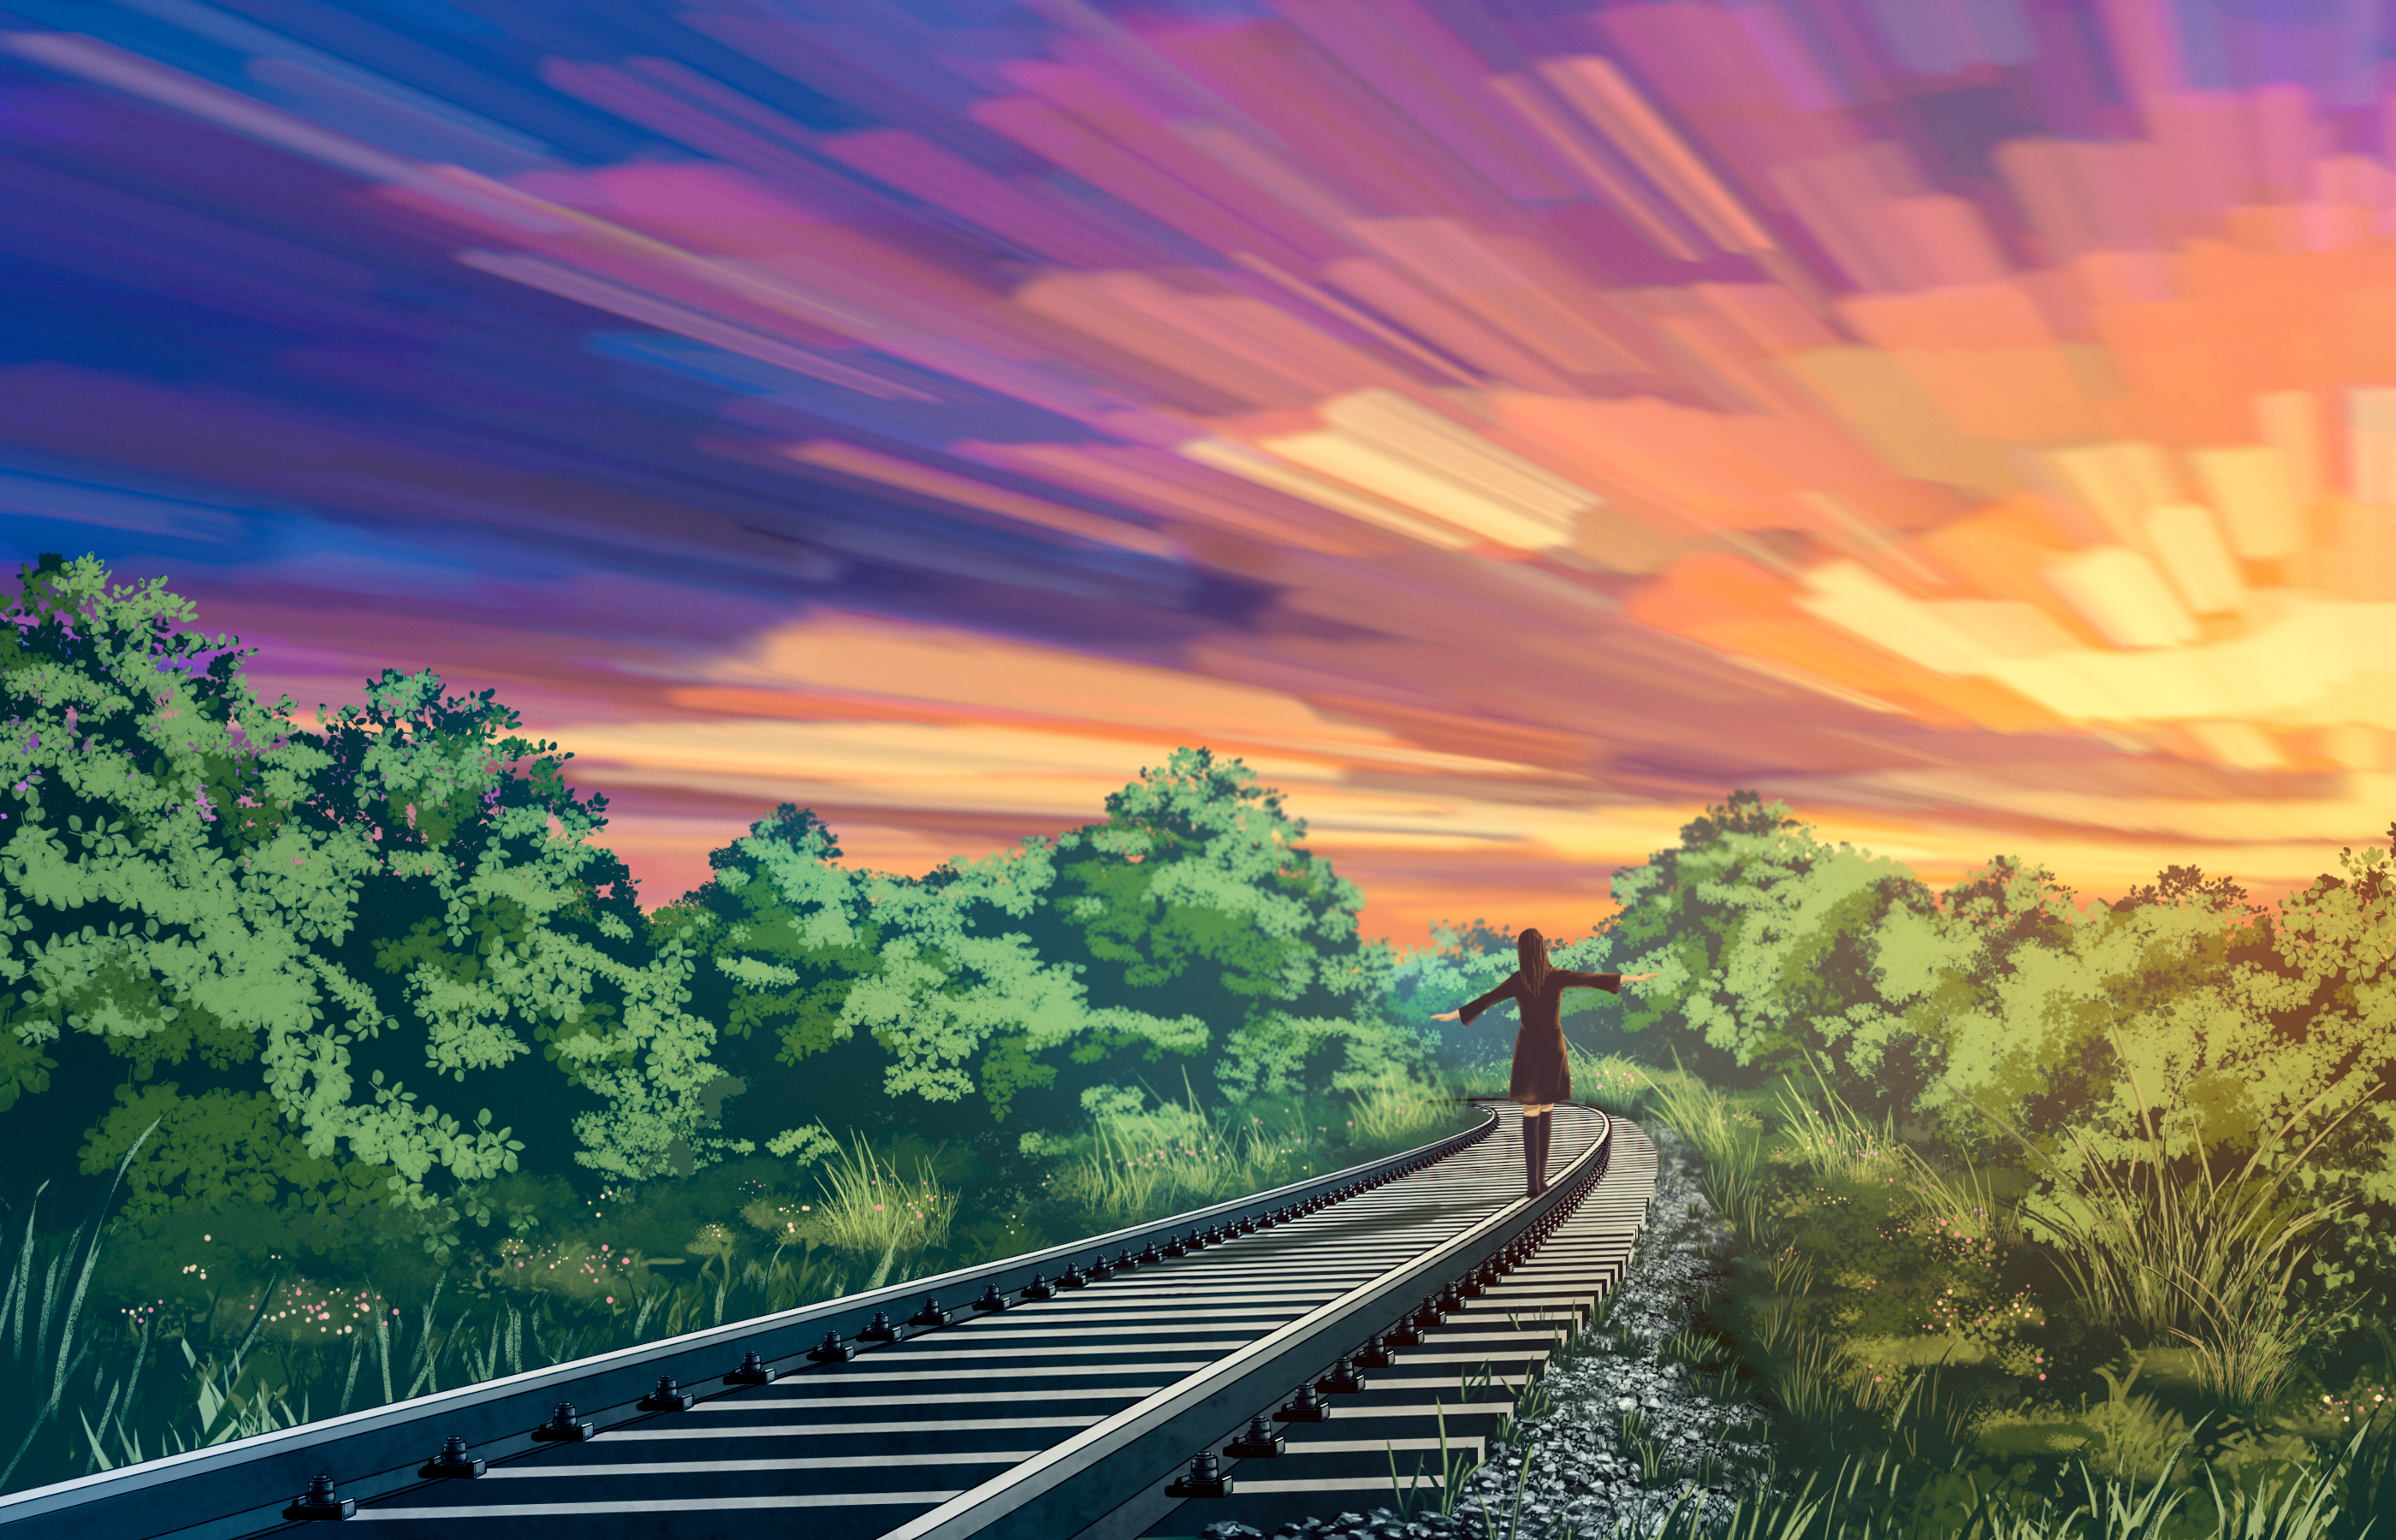 Anime girl walking on a railroad track by liwei191